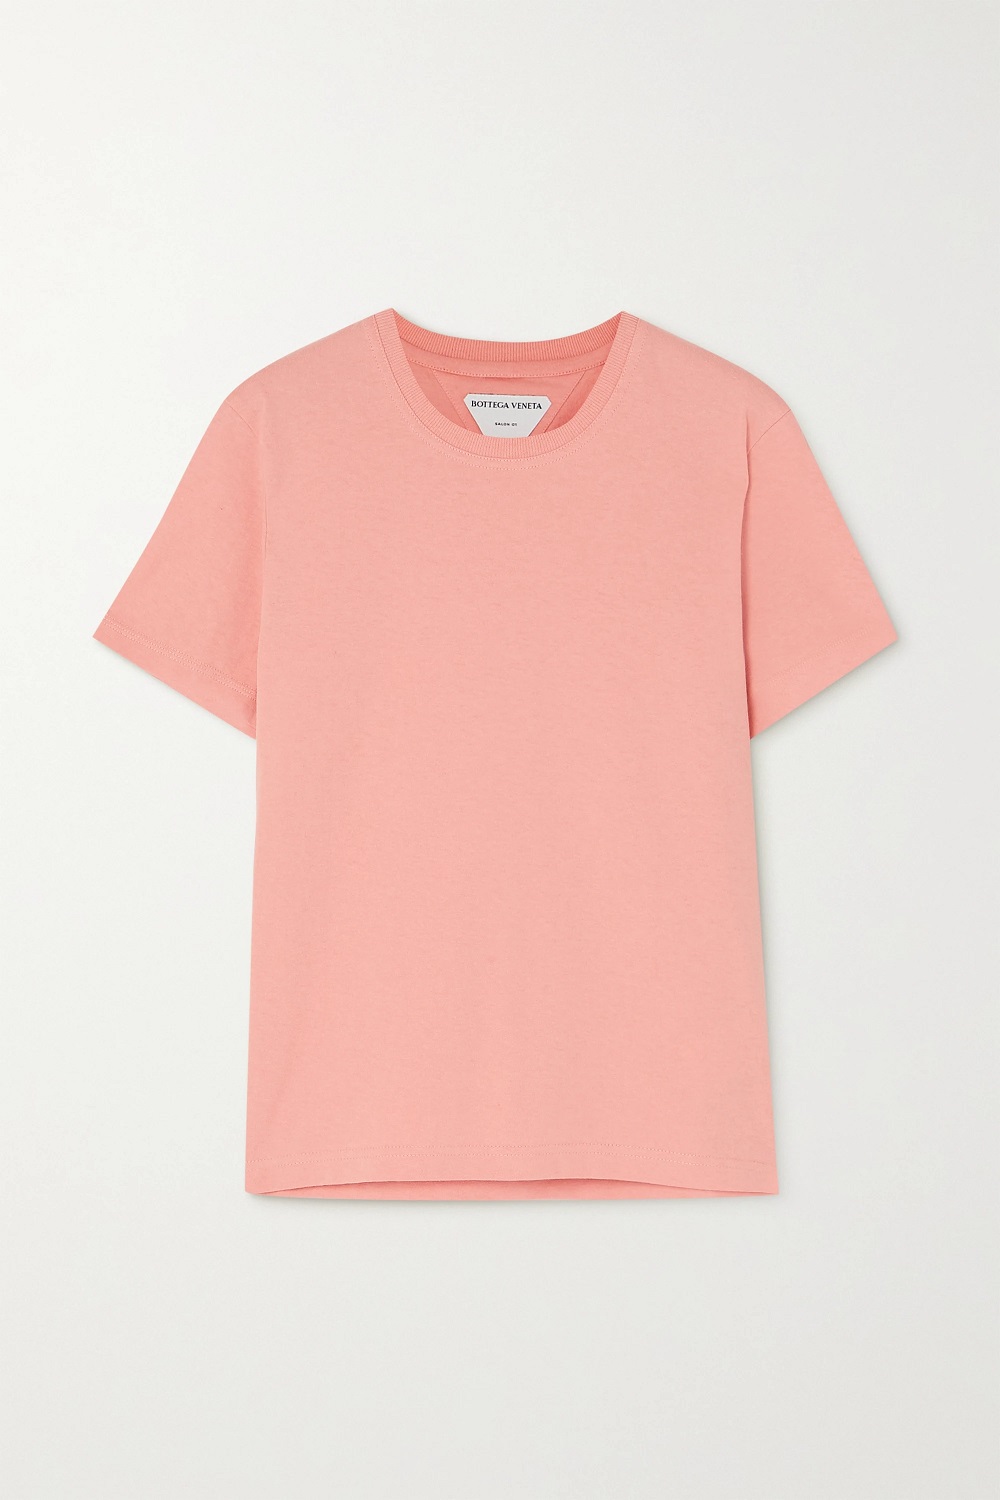 Bottega Veneta T-shirt ružičasta boja proljeće 2021.